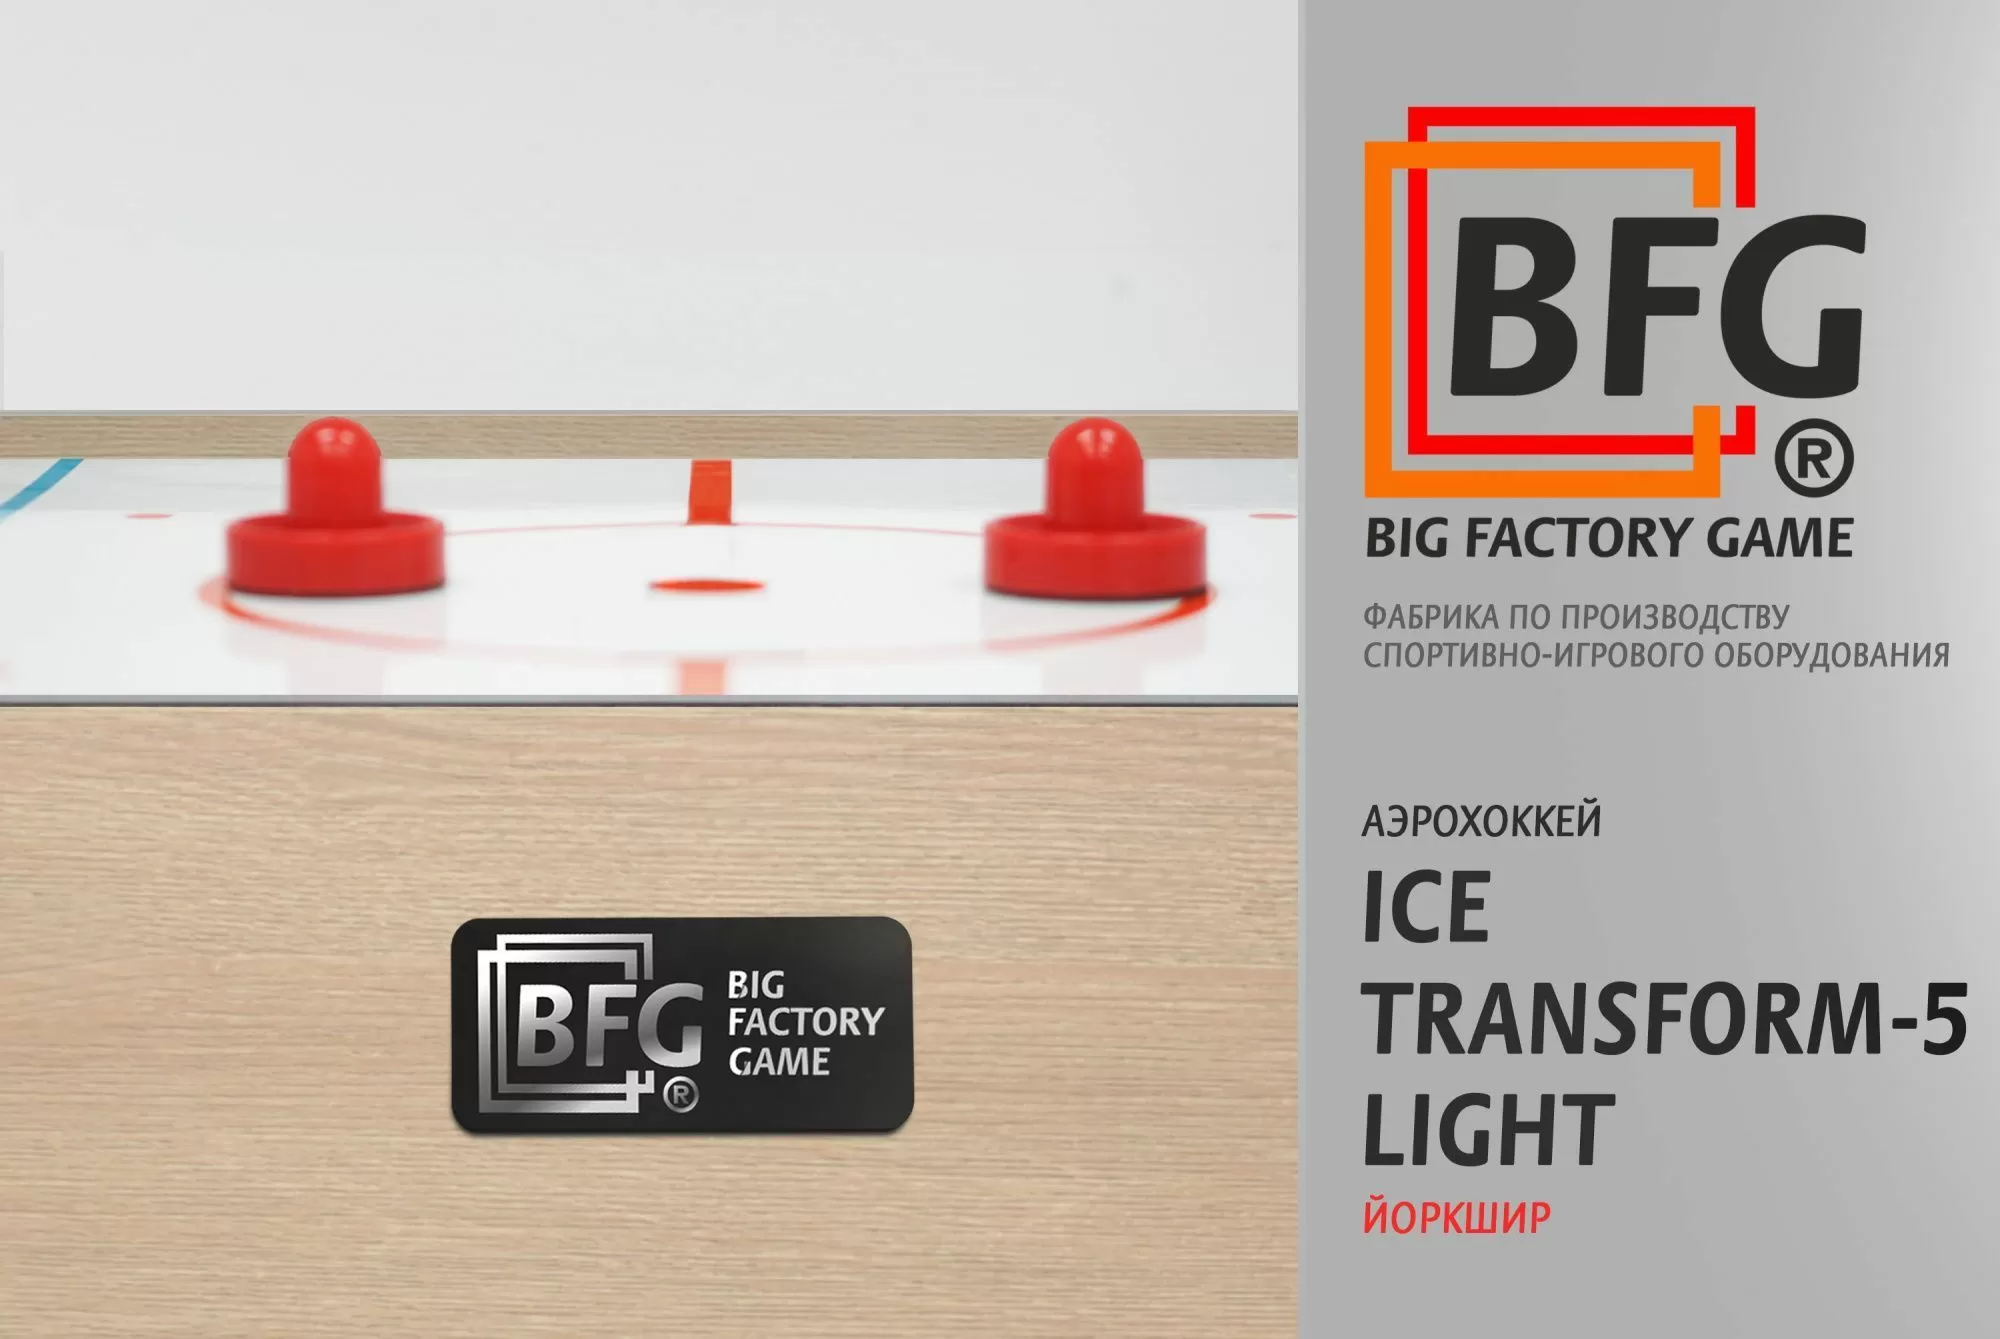 Аэрохоккей BFG Ice Transform 5 (Йоркшир) Light